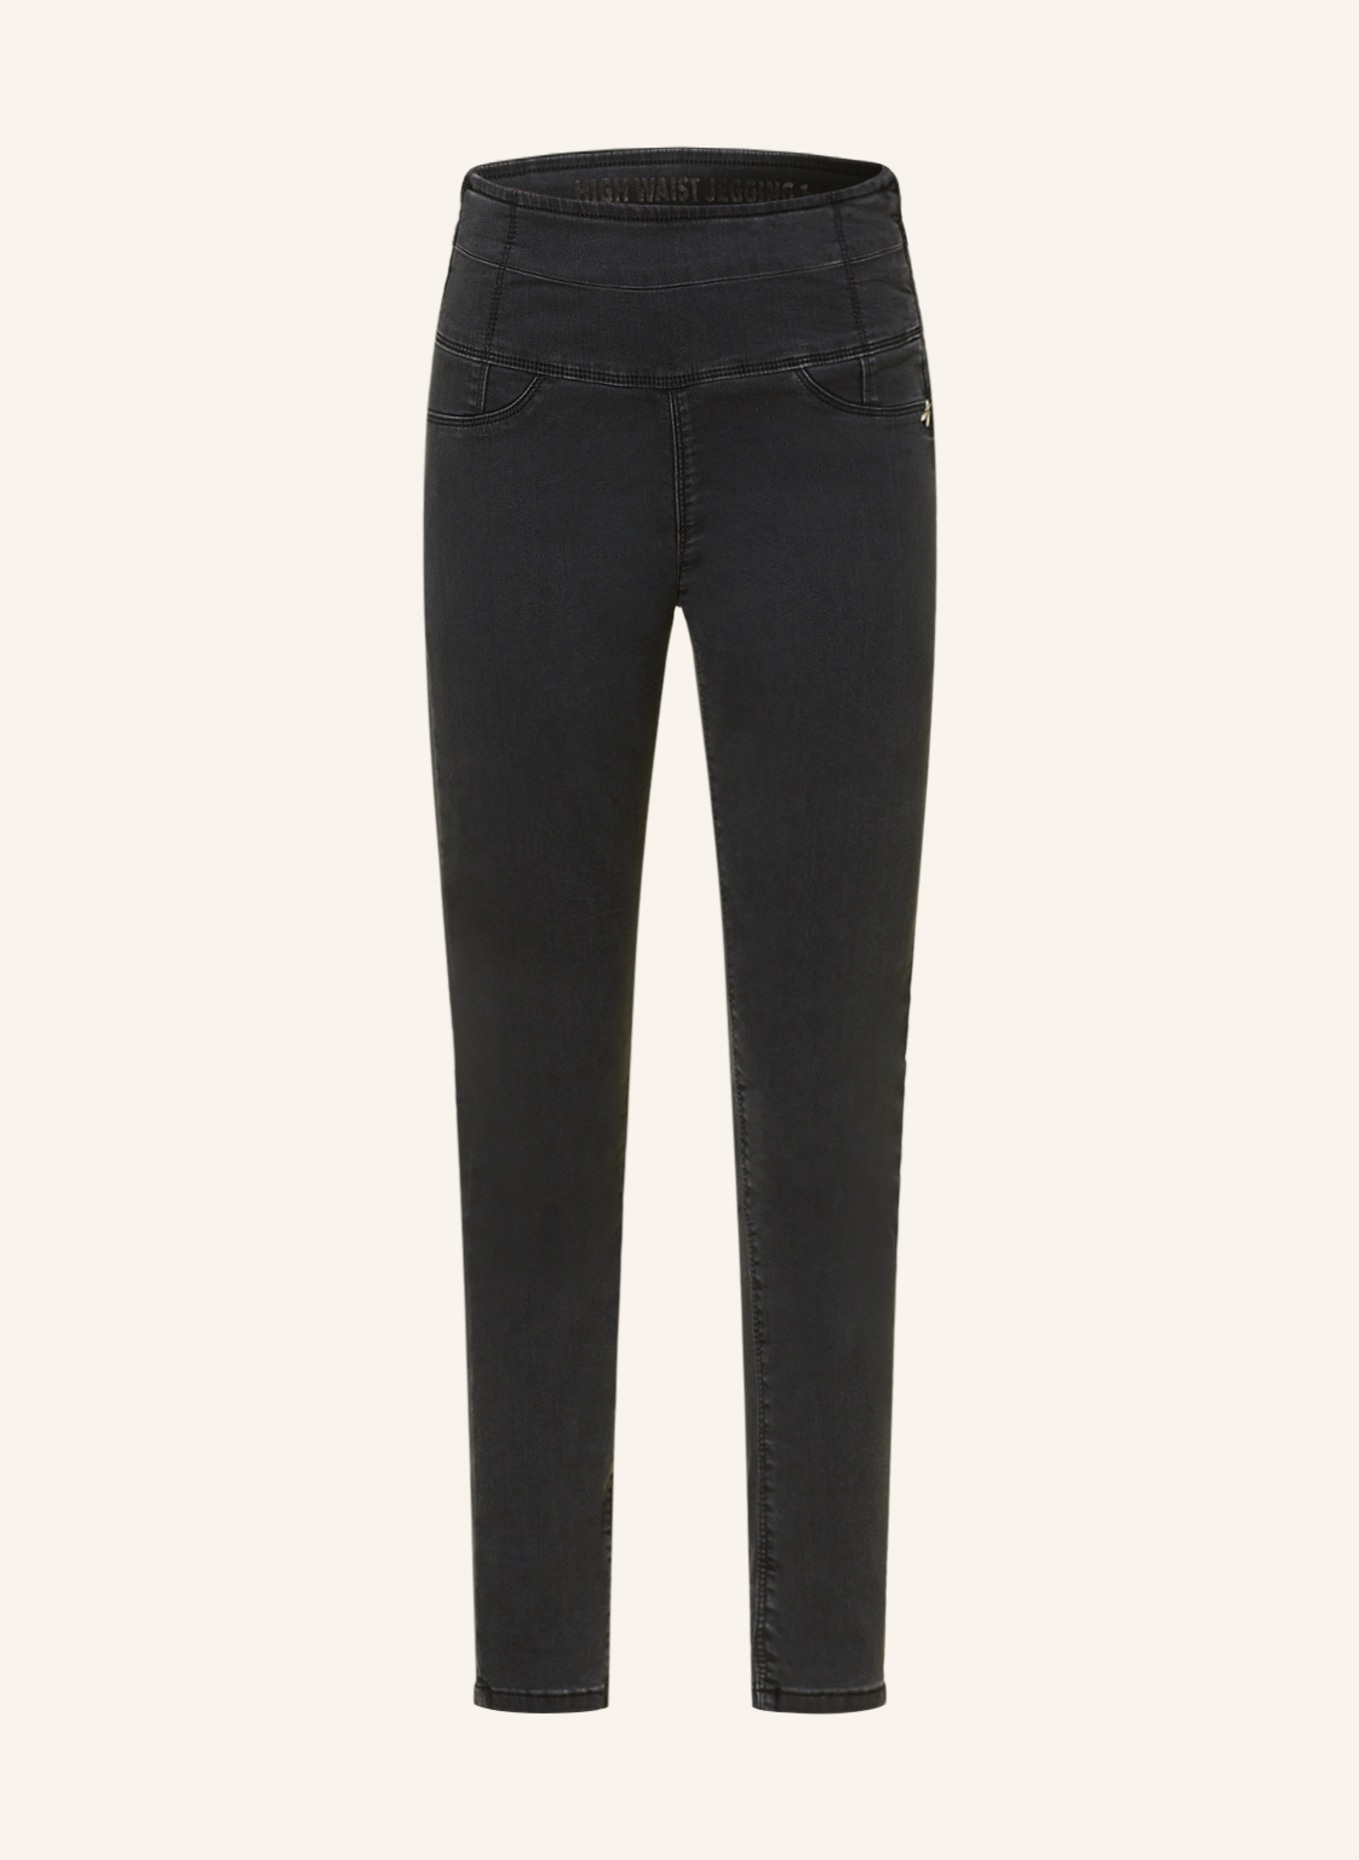 PATRIZIA PEPE Jeans, Farbe: K428 Deep Black Wash (Bild 1)